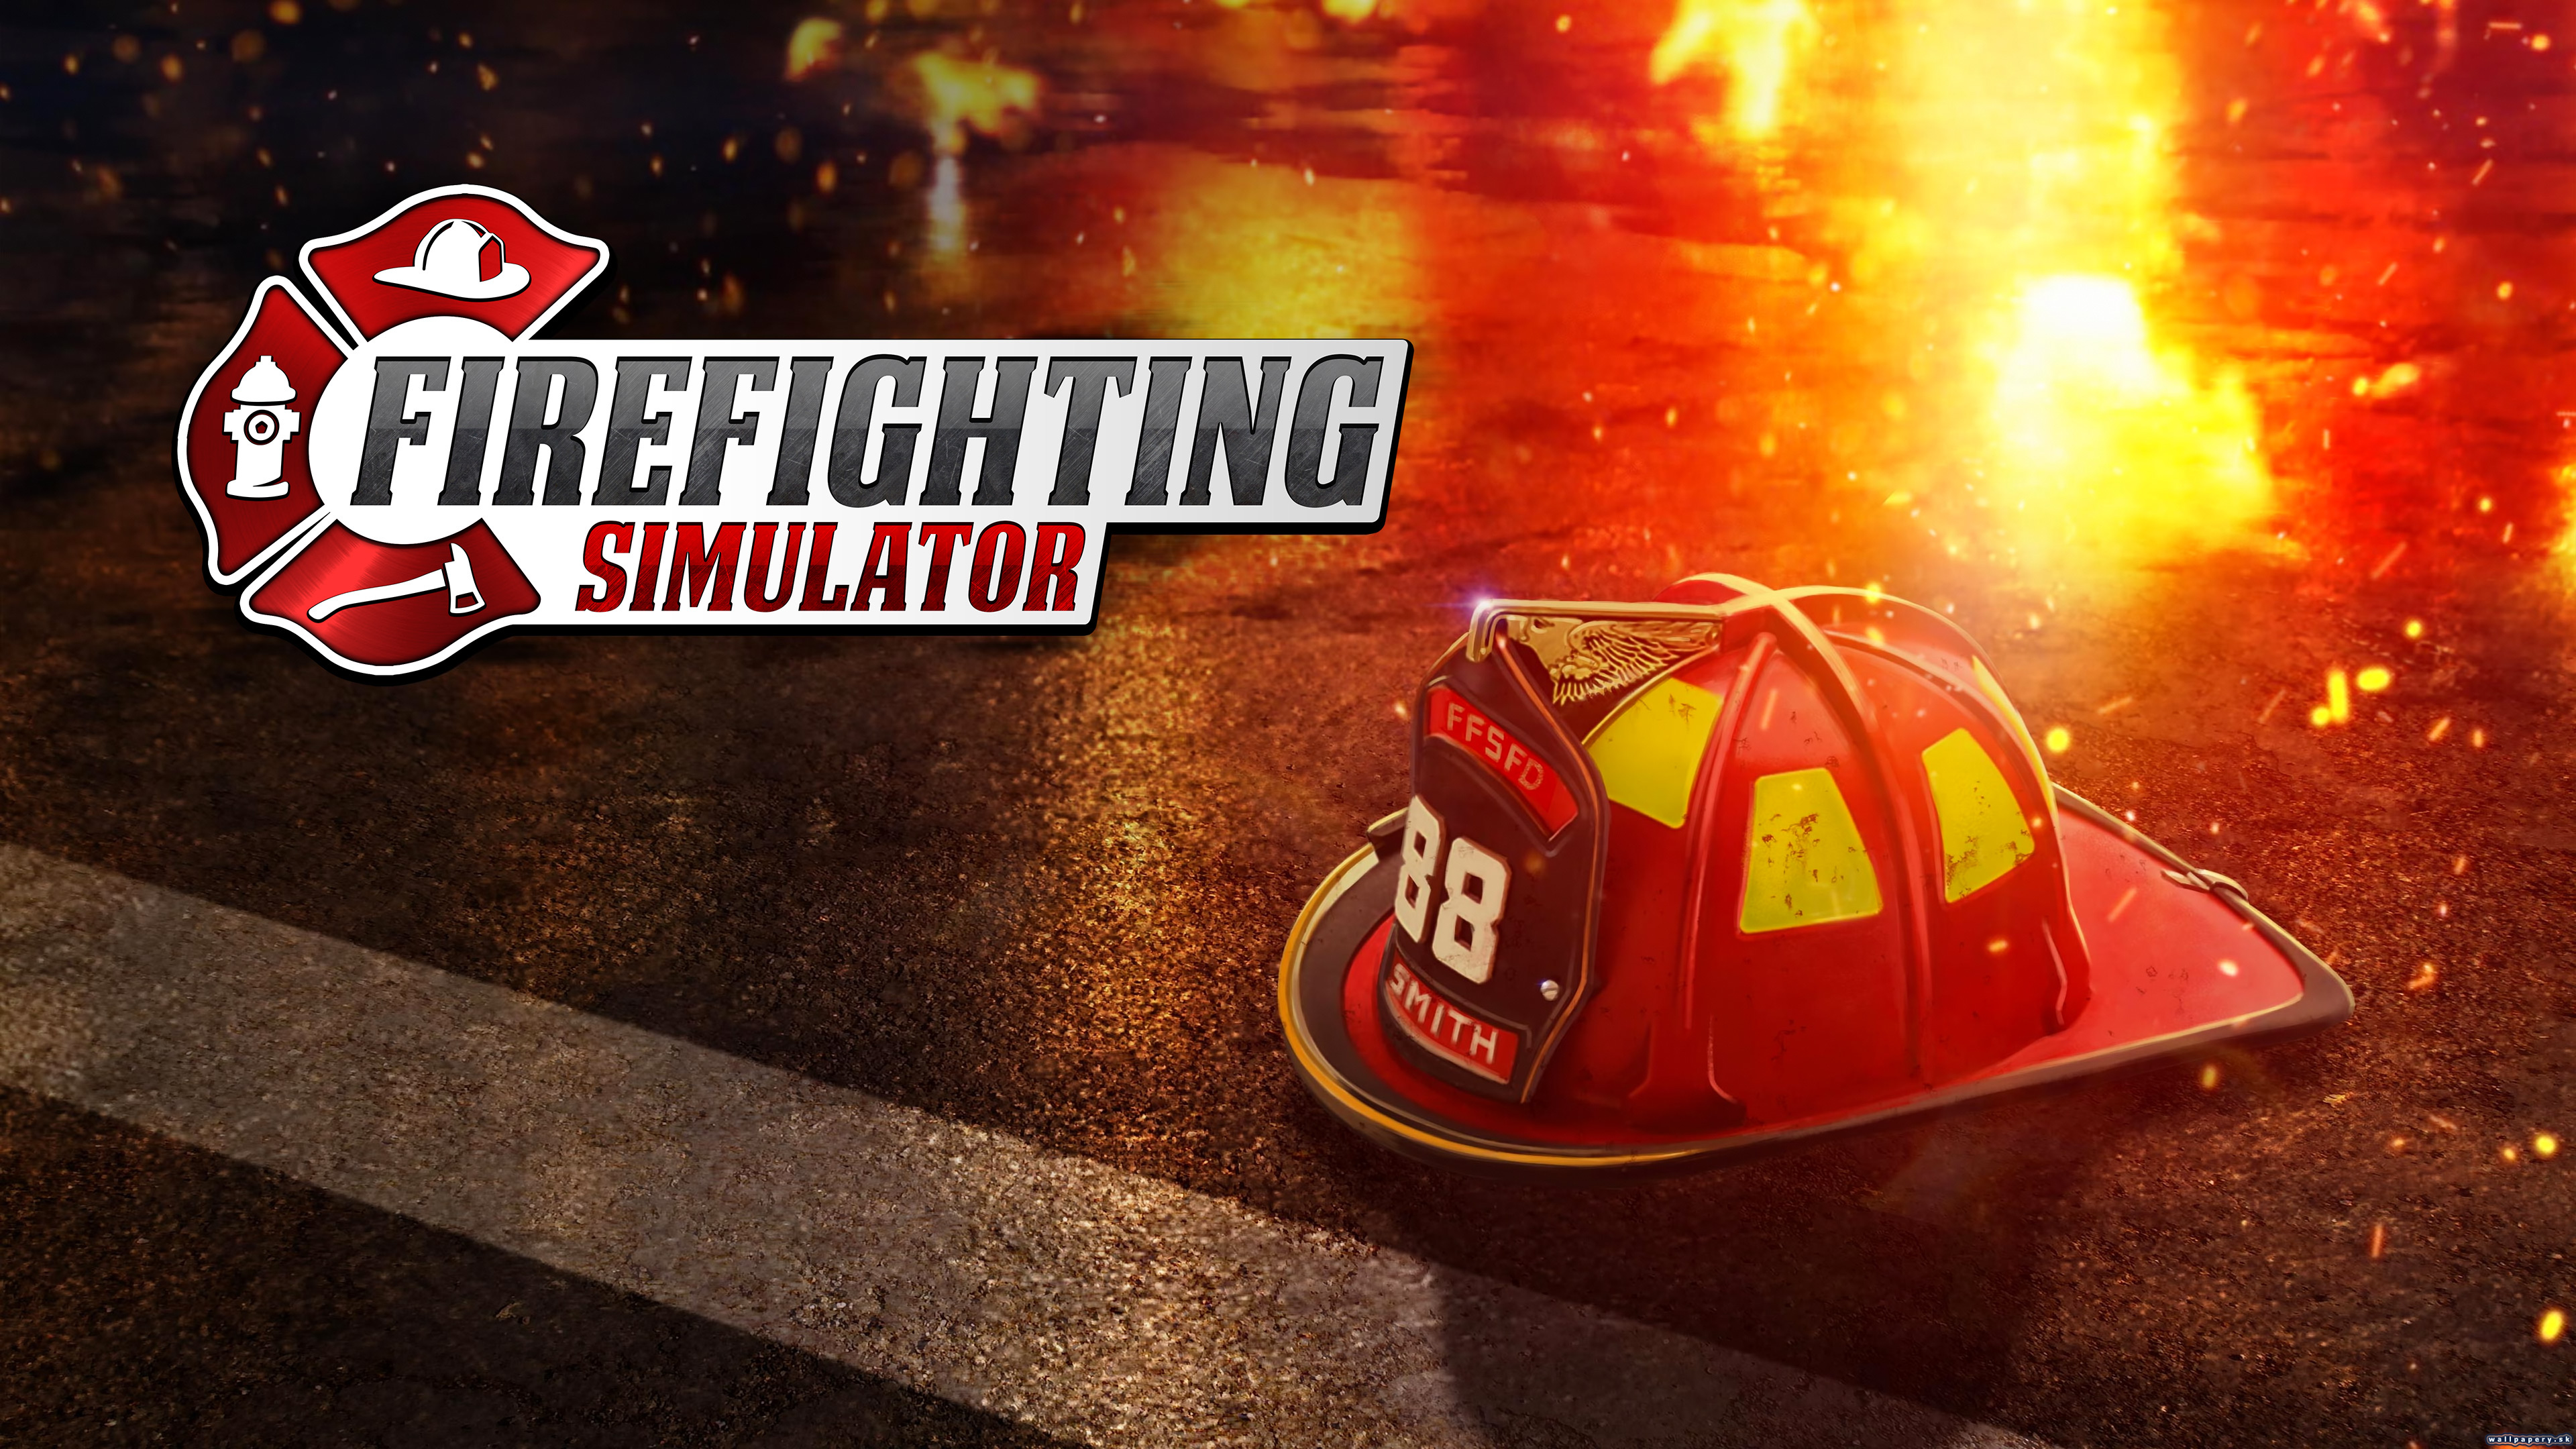 Firefighting Simulator: The Squad - wallpaper 2